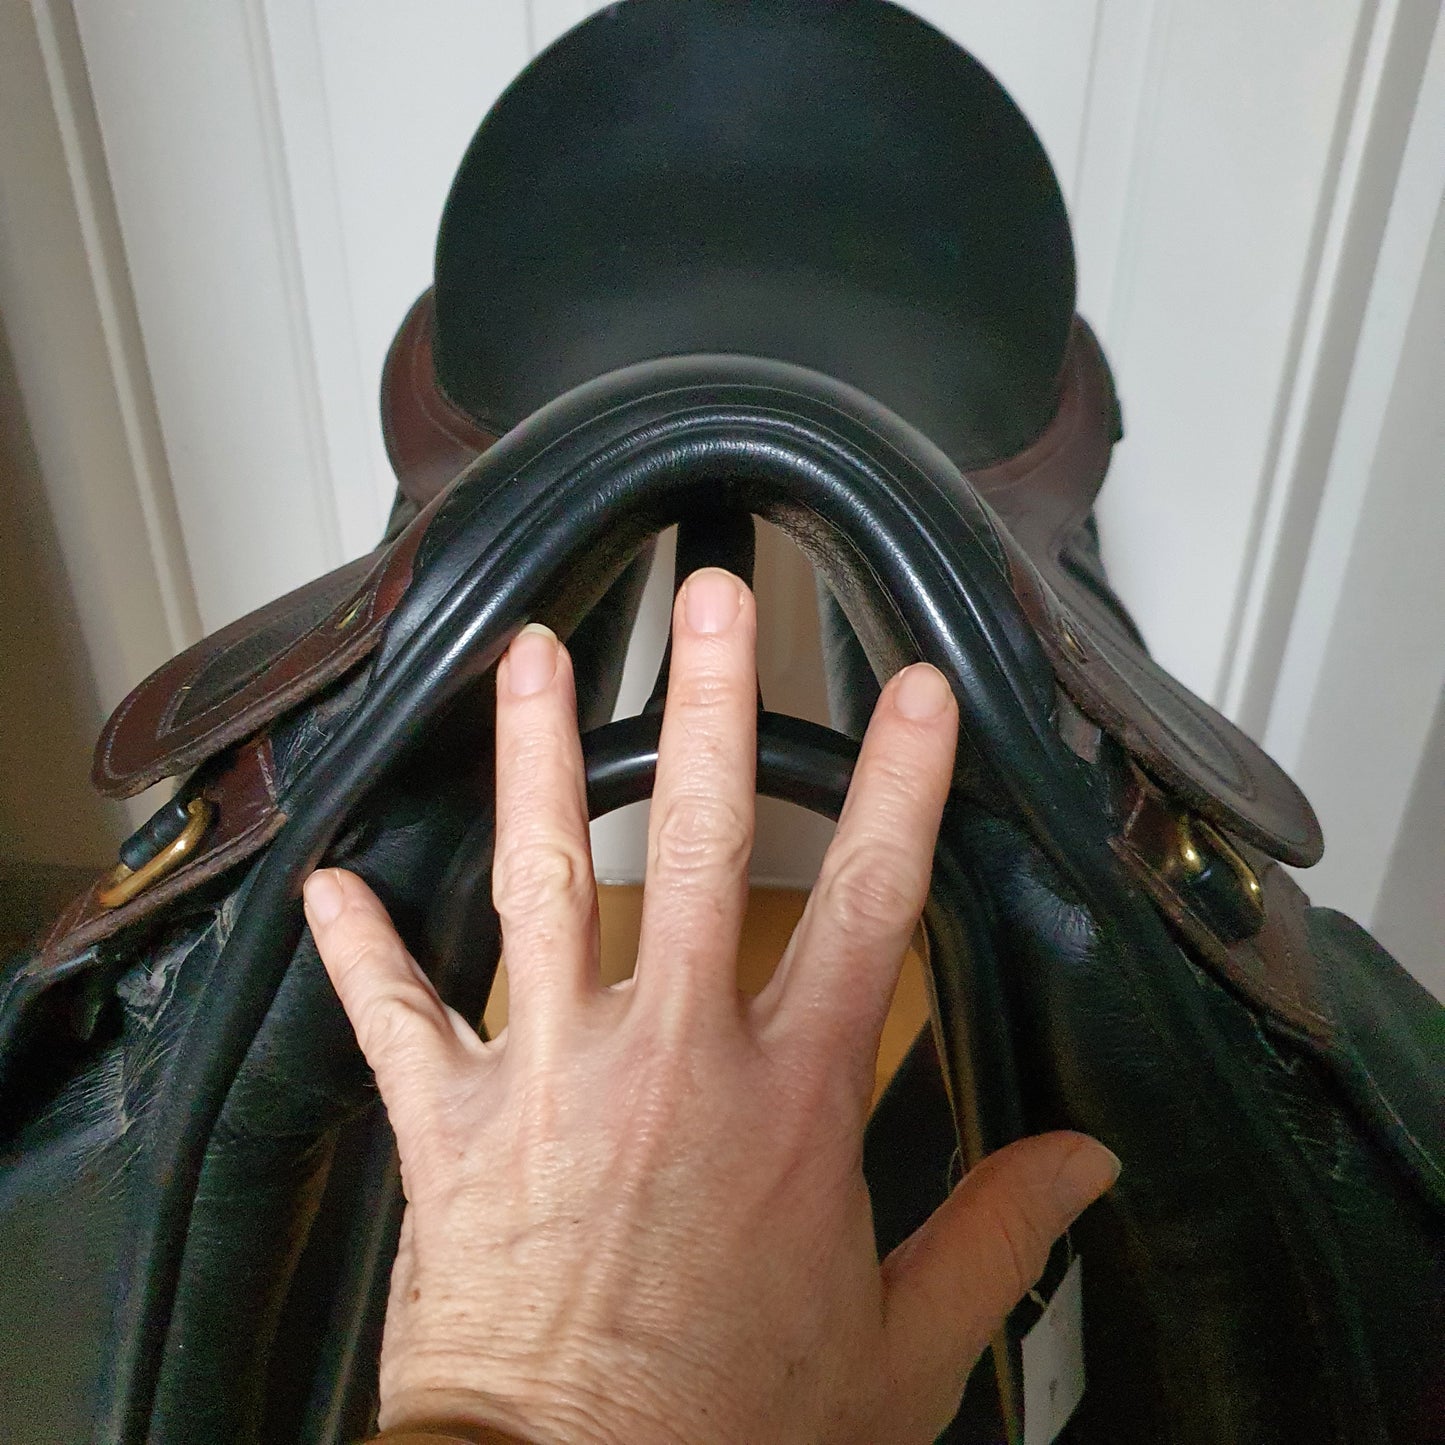 Fenmore Koru leather dressage saddle 17" medium wide gullet